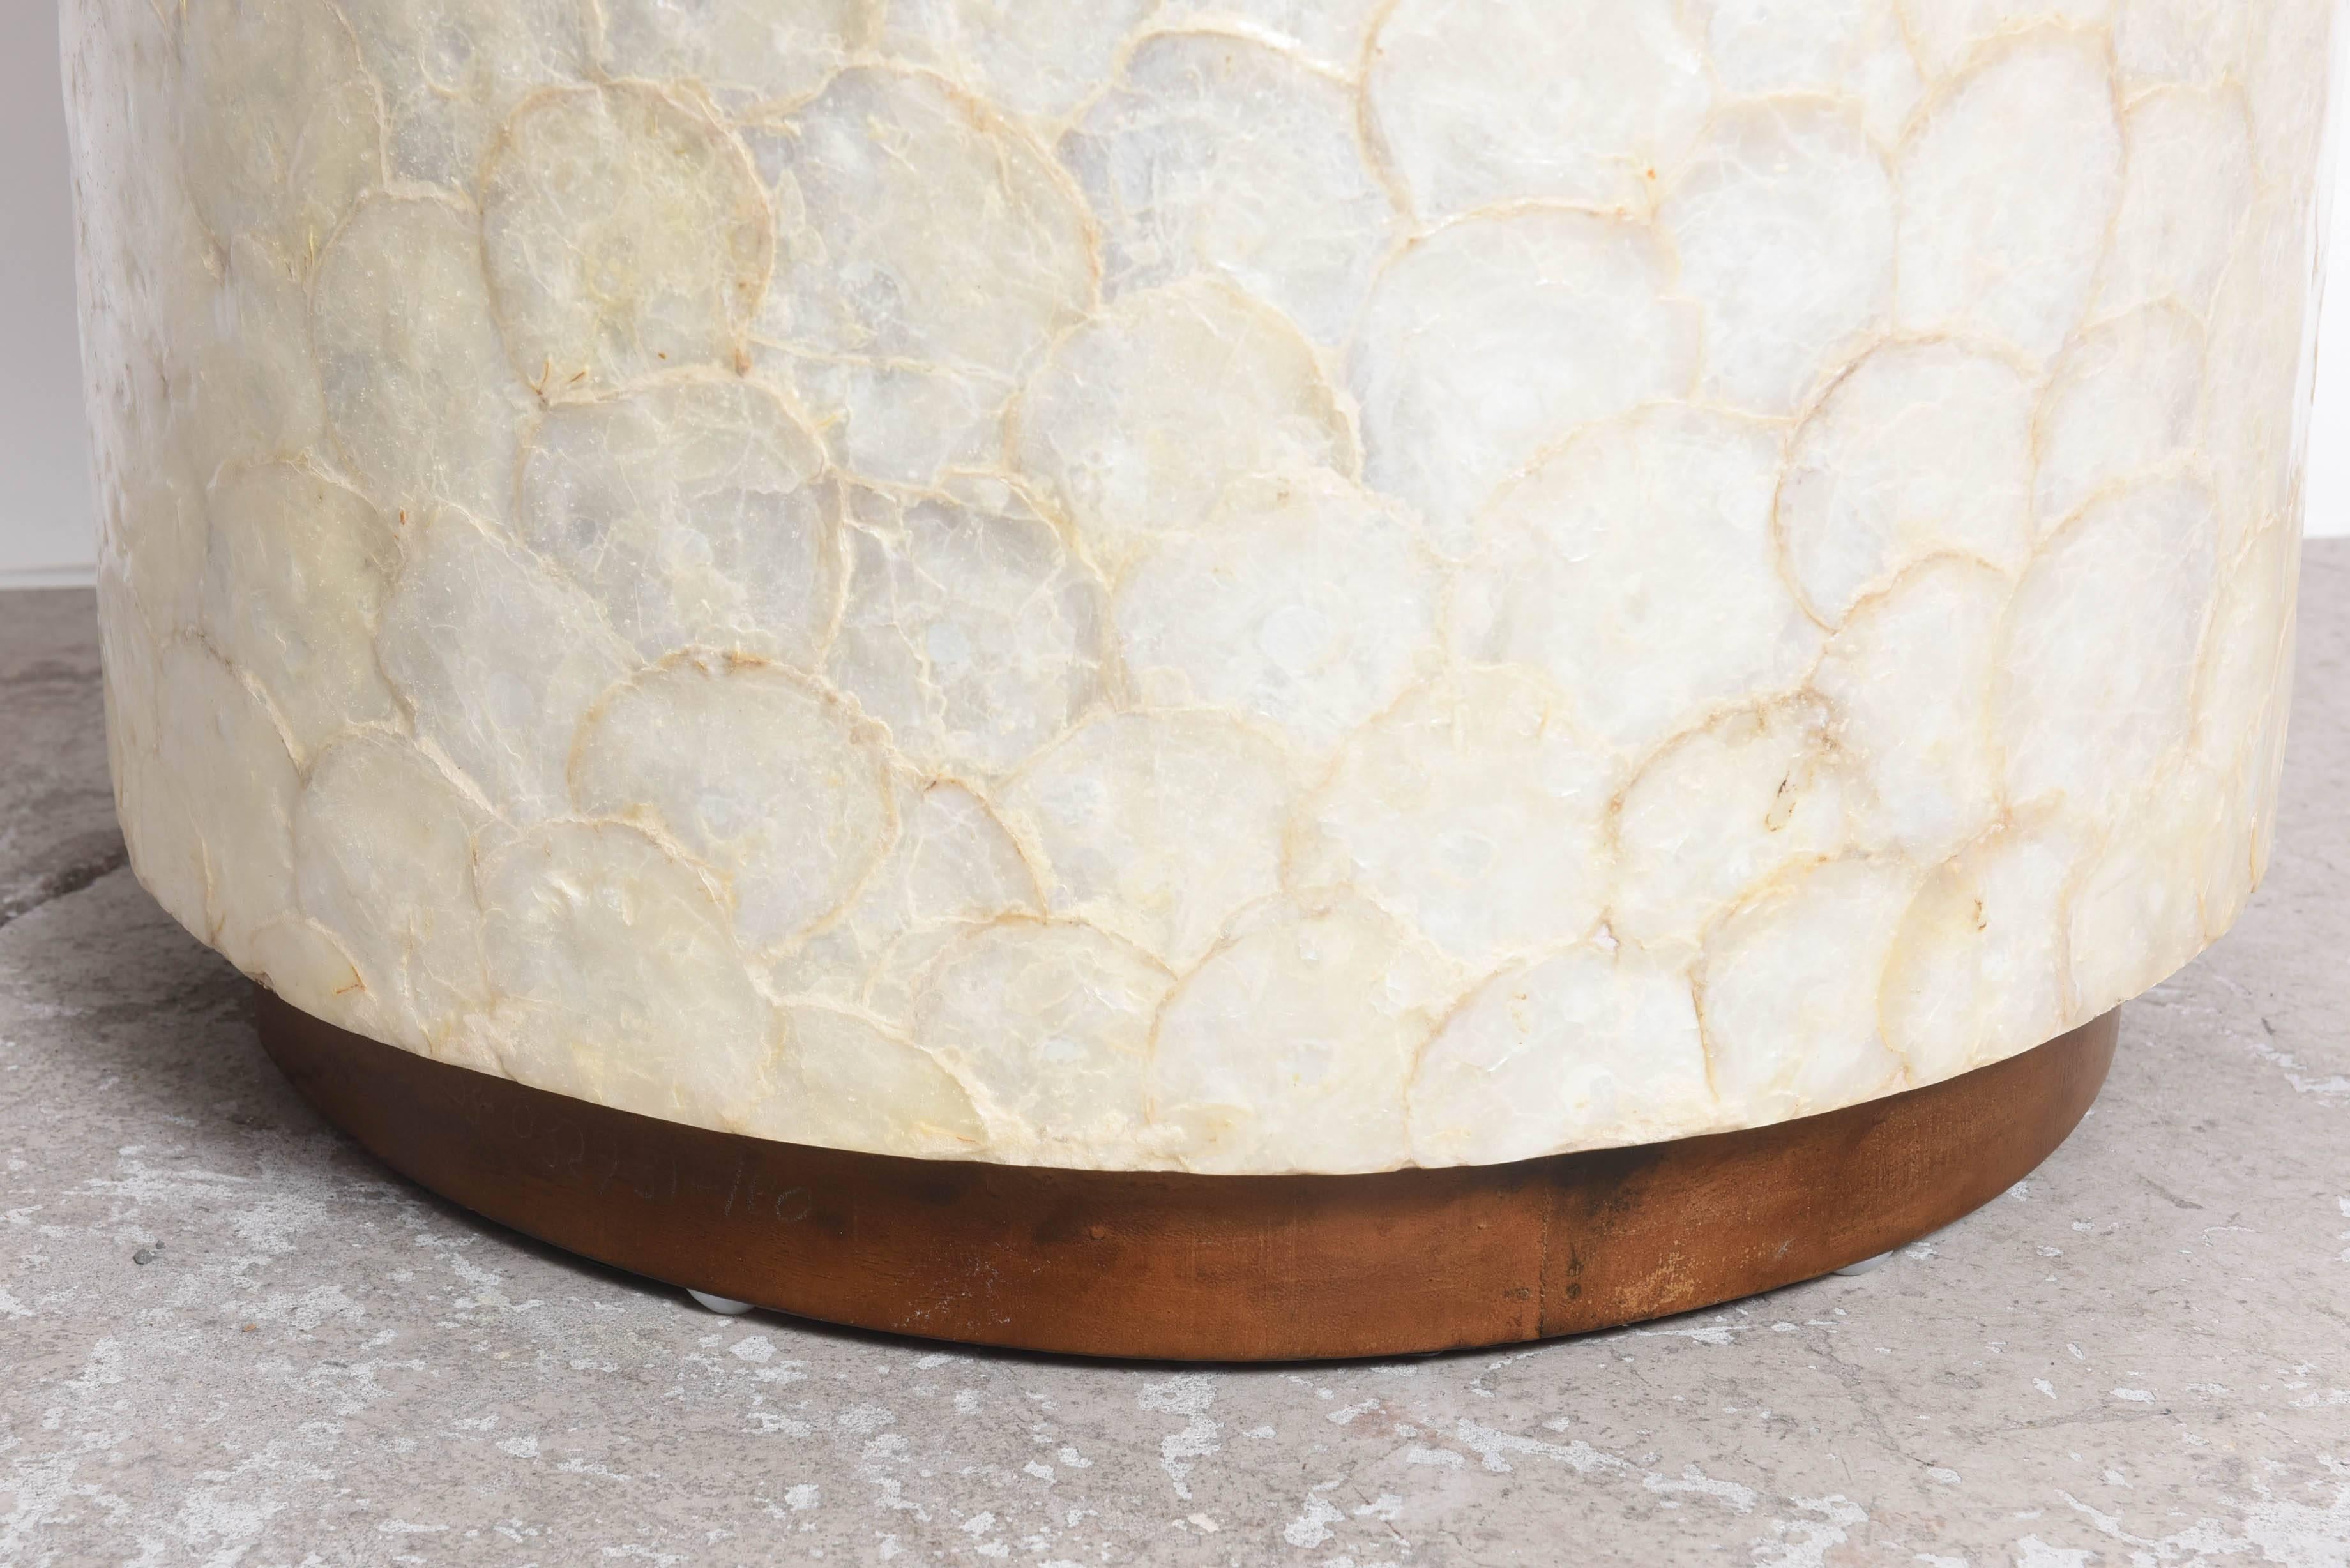 Hand-Crafted Mid-Century Modern Stylish Round Drum Capiz Shell Tables, Pedestals